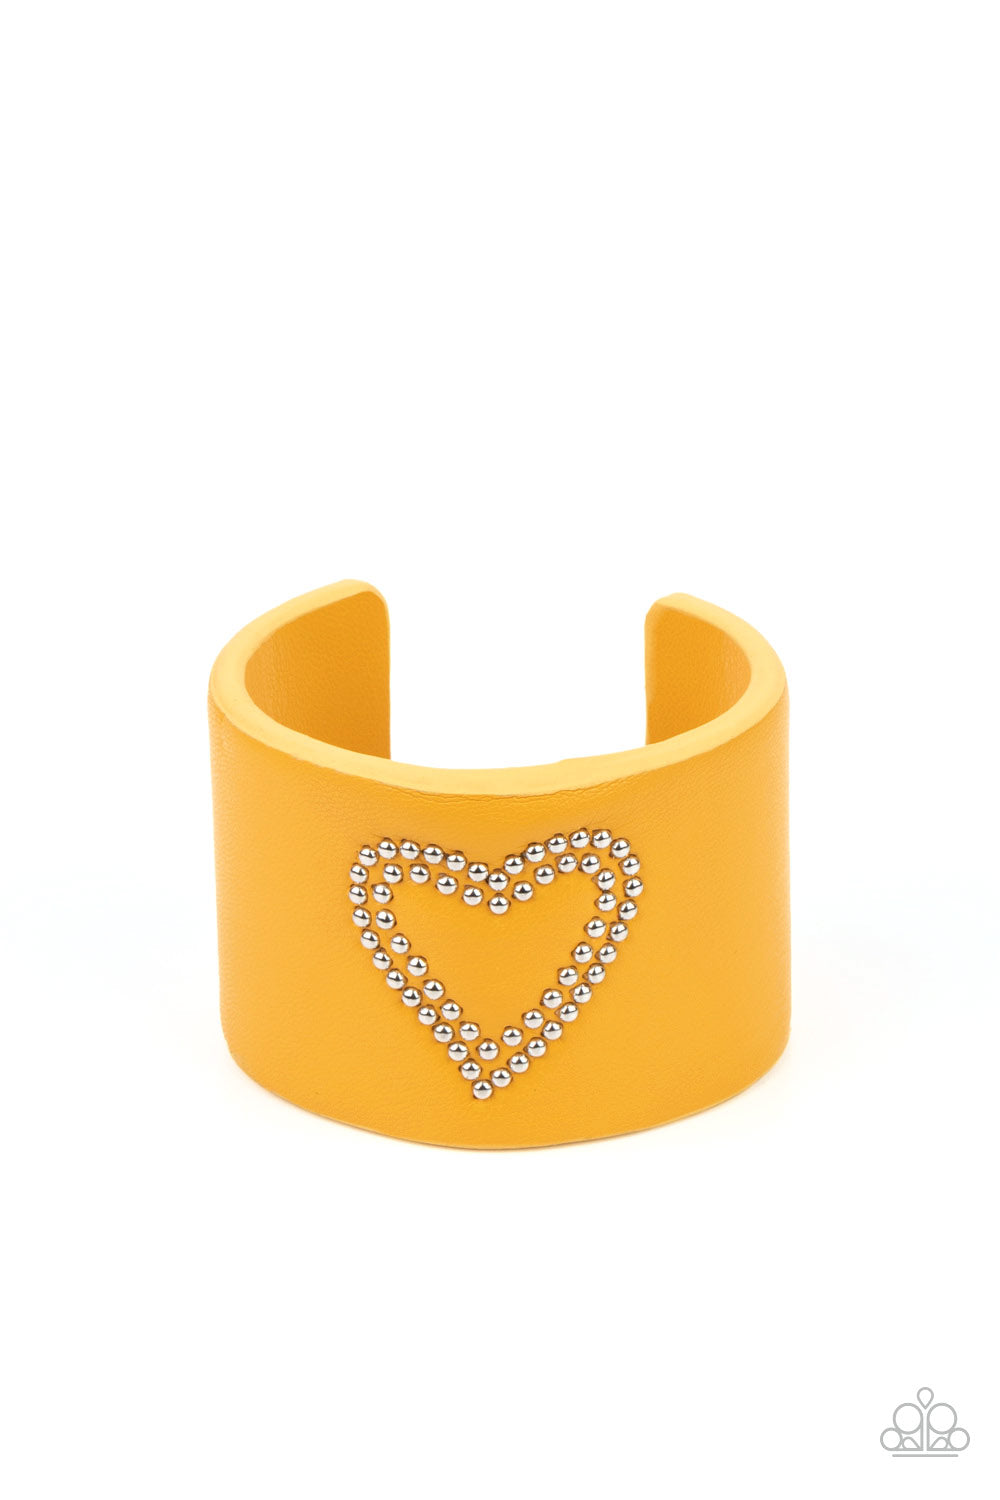 Rodeo Romance - Yellow Leather Cuff Bracelet - Princess Glam Shop